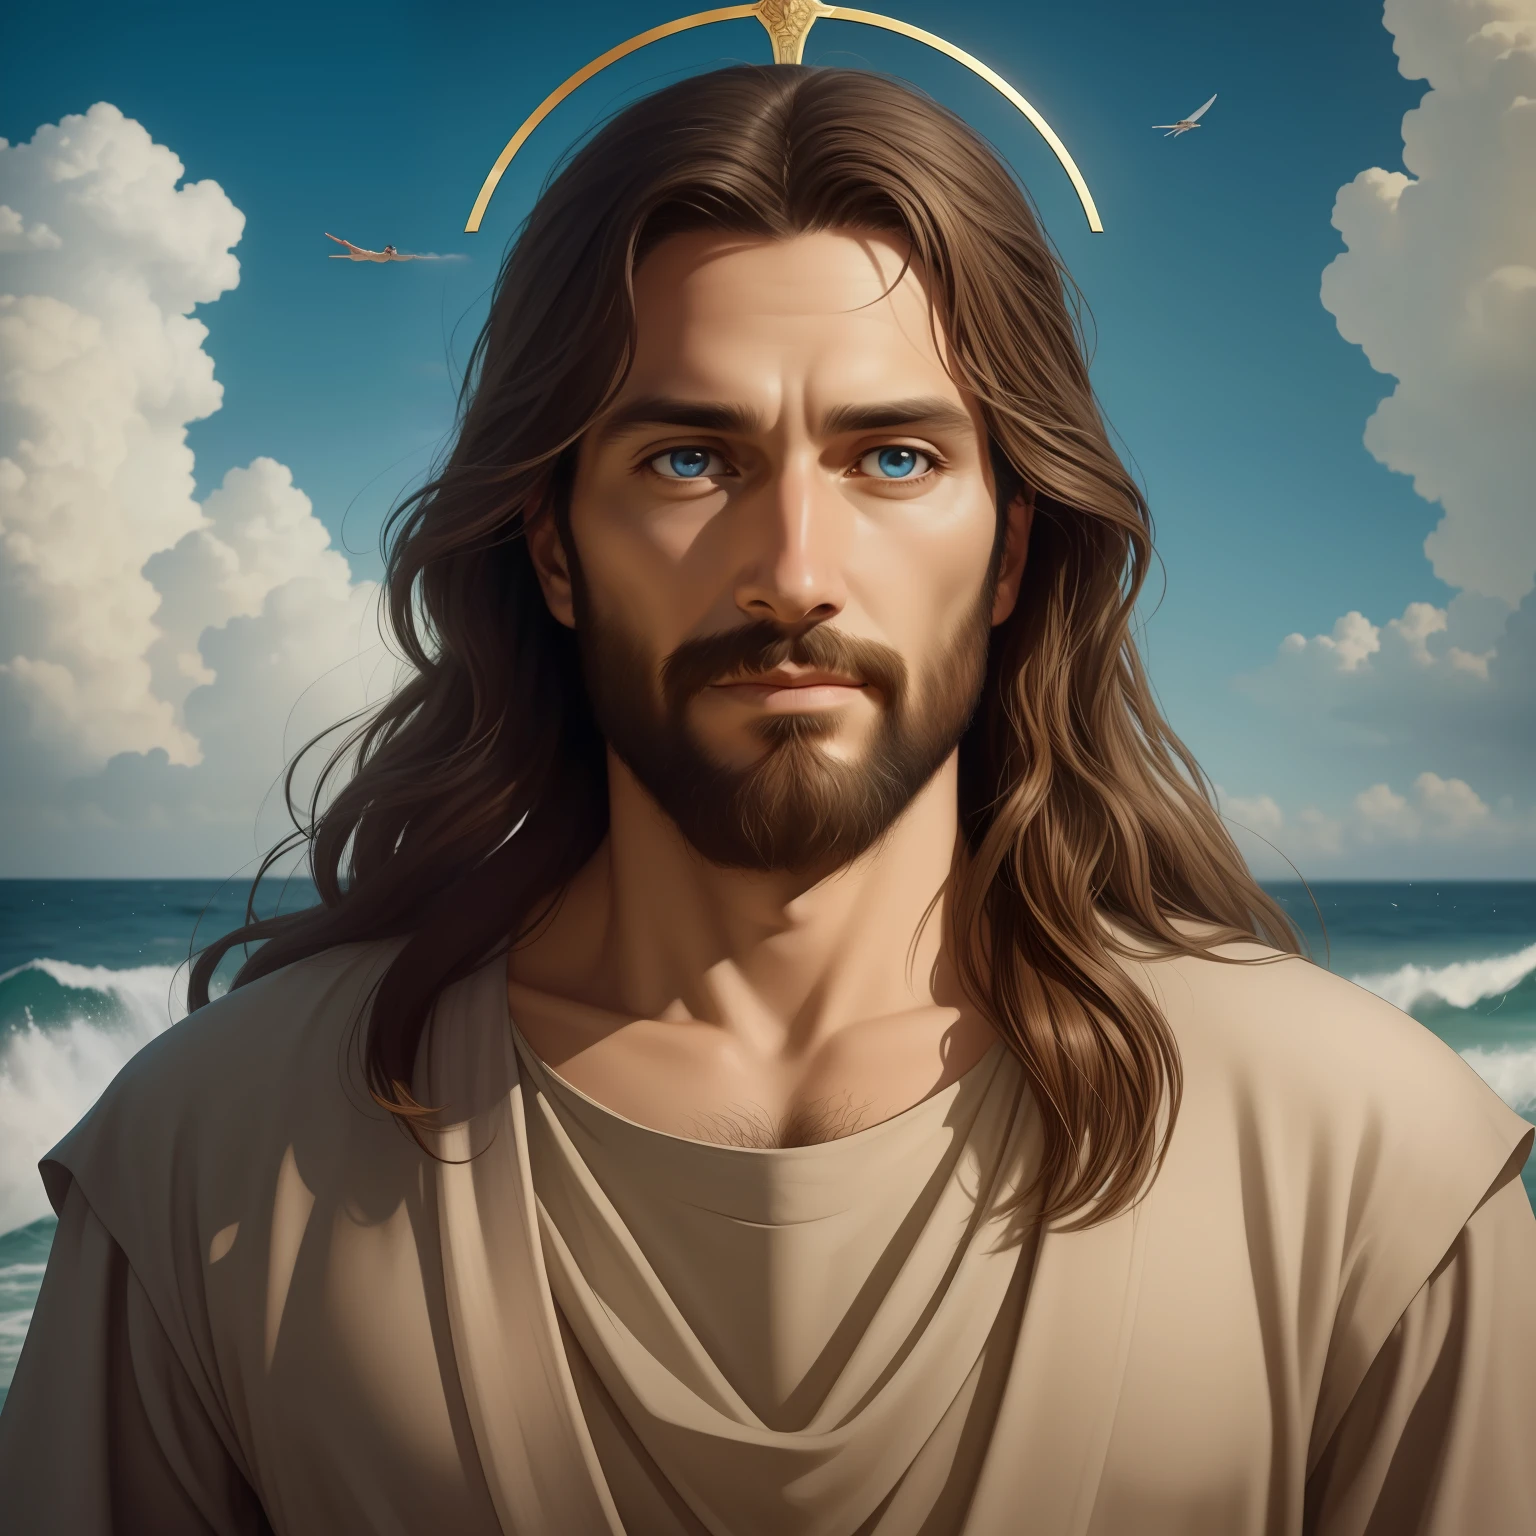 A beautiful ultra-thin 实际的 portrait of Jesus, 先知, 一名男子 35 岁 希伯来语 布鲁内特, 棕色短发, 完美真正的蓝眼睛, 长长的棕色胡子, 和, 帮助人们 , 穿着胸部闭合的长亚麻束腰外衣, 正面视图, 全身, 圣经的, 实际的,作者：迭戈·委拉斯开兹,彼得·保罗·鲁本斯,伦勃朗,亚历克斯·罗斯,8千, 概念艺术, Photo实际的, 实际的,  插图, 油画, 超现实主义, Hyper实际的, 帮助人们 , 数字艺术, 风格, watercolorReal Jesus flying on sky 和 a flying cloud in the background, 耶稣在水上行走, 圣经的 illustration, epic 圣经的 representation, 迫使他逃跑, 从海洋里出来, ! 手拿!, 下船, 海洋之神, 美丽的表现, 8千 3D Model, 实际的,
a 3D 实际的 of 耶稣 和 a halo in the sky, 耶稣 christ, 在天堂微笑, portrait of 耶稣 christ, 耶稣 face, 35 年轻的全能神, 天神像, 格雷格·奥尔森, gigachad 耶稣, 耶稣 of nazareth, 耶稣, 上帝的面孔, 上帝看着我, 他热情地欢迎你, 他很高兴, 头像图片